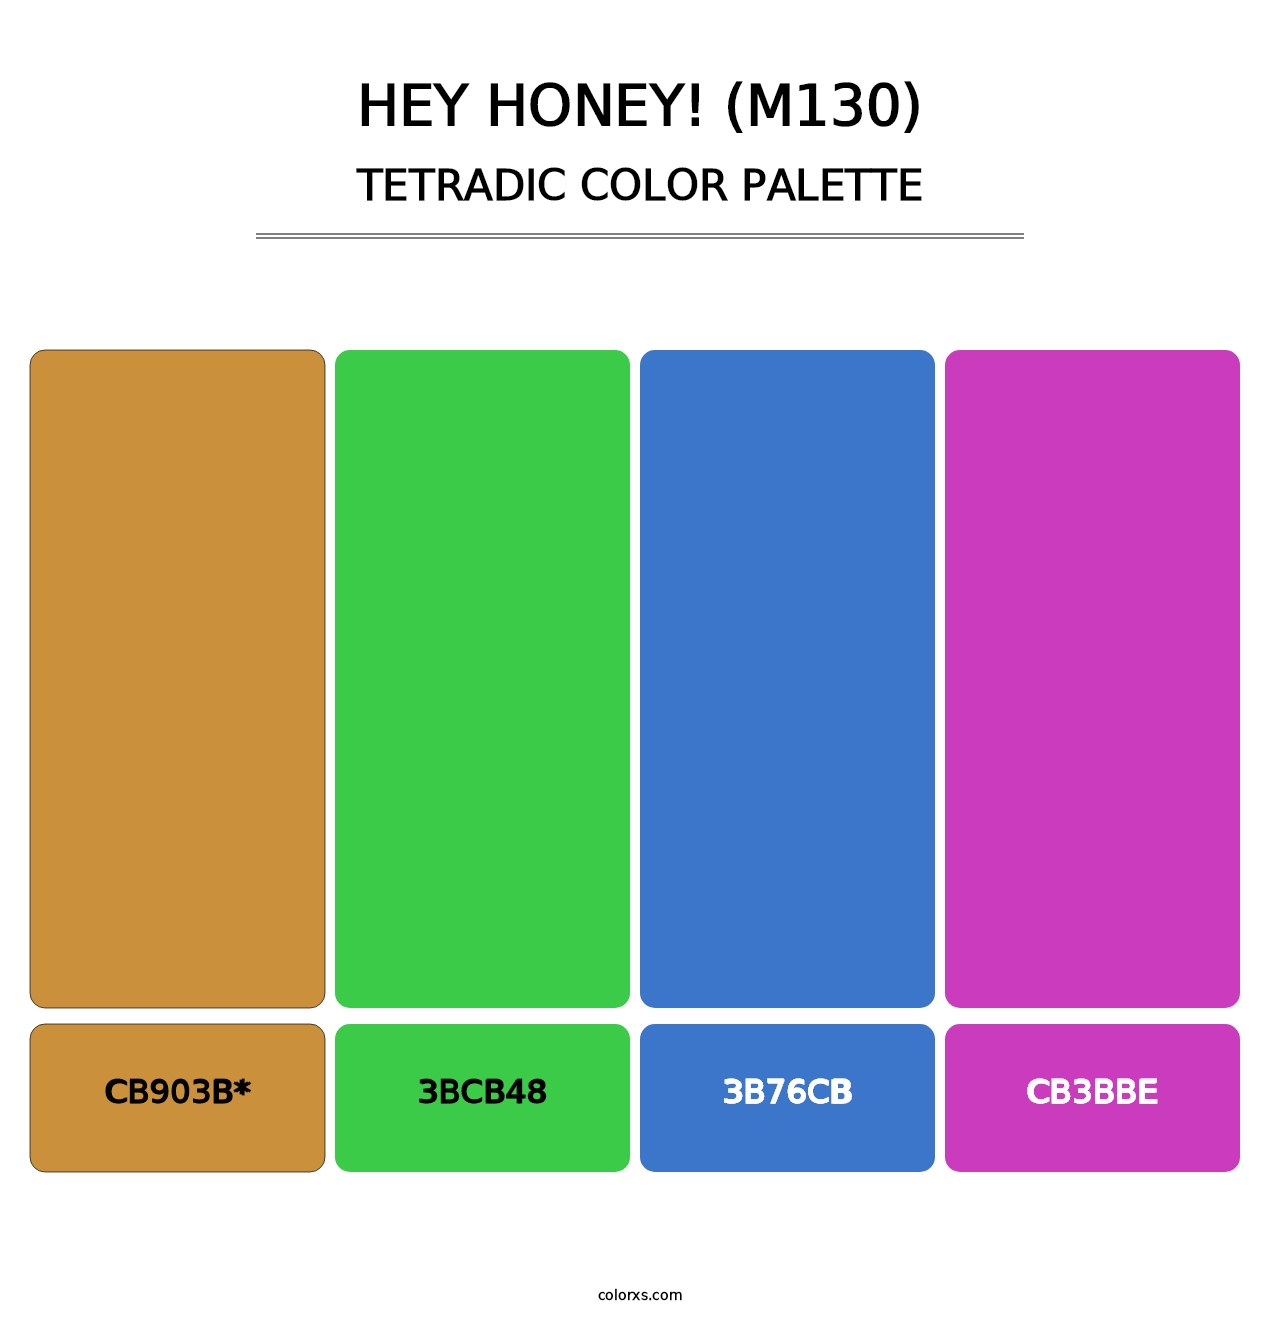 Hey Honey! (M130) - Tetradic Color Palette